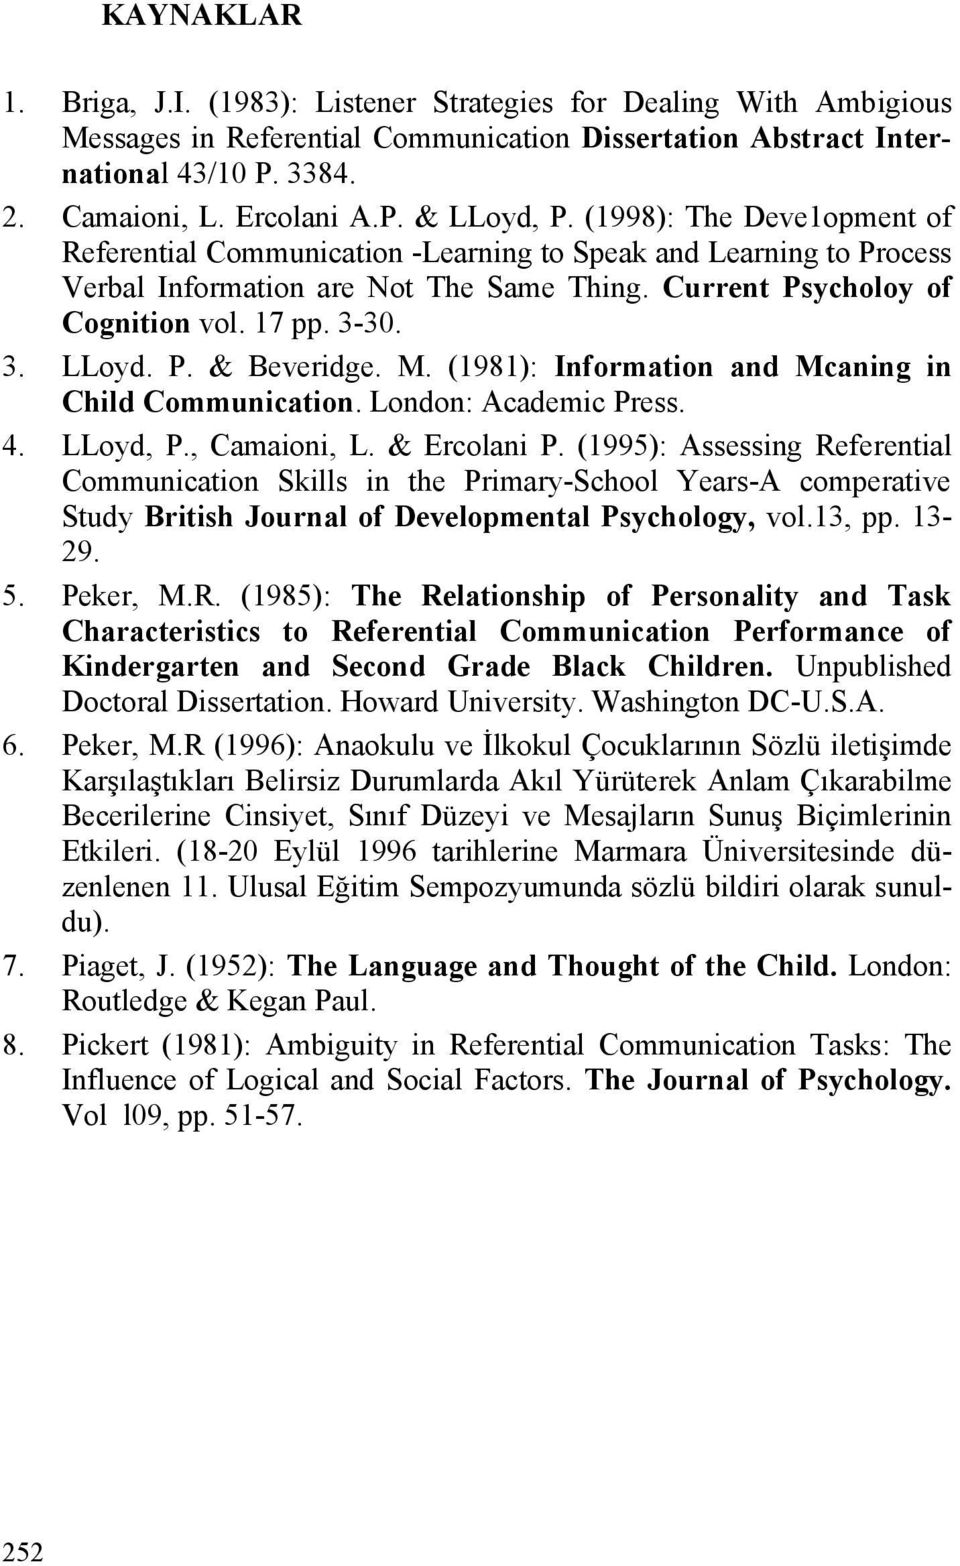 M. (1981): Information and Mcaning in Child Communication. London: Academic Press. 4. LLoyd, P., Camaioni, L. & Ercolani P.